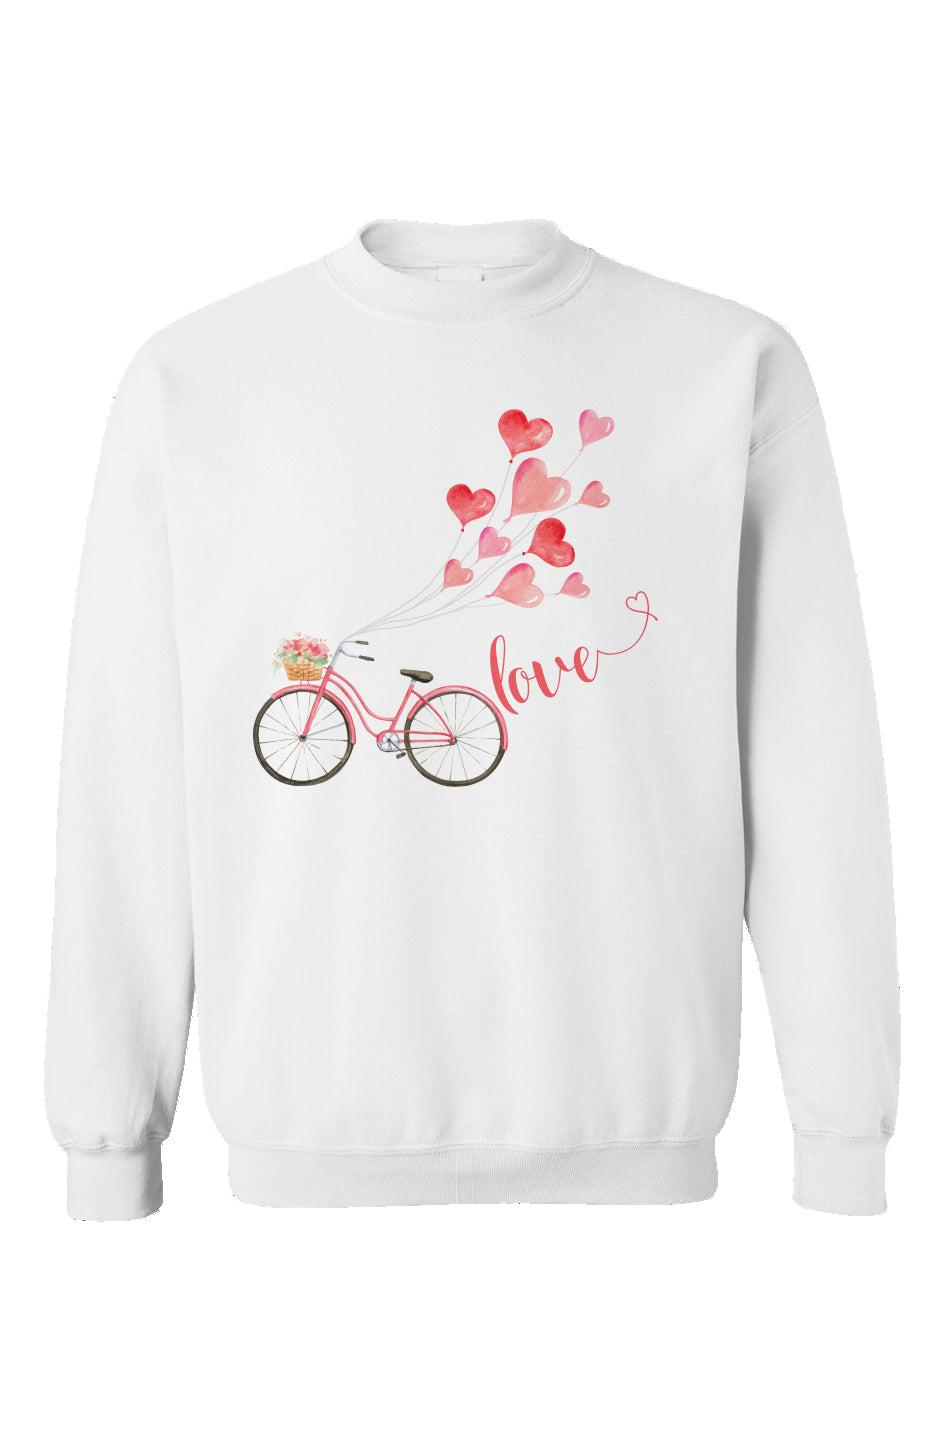 "LOVE" Bicycle- White Crewneck